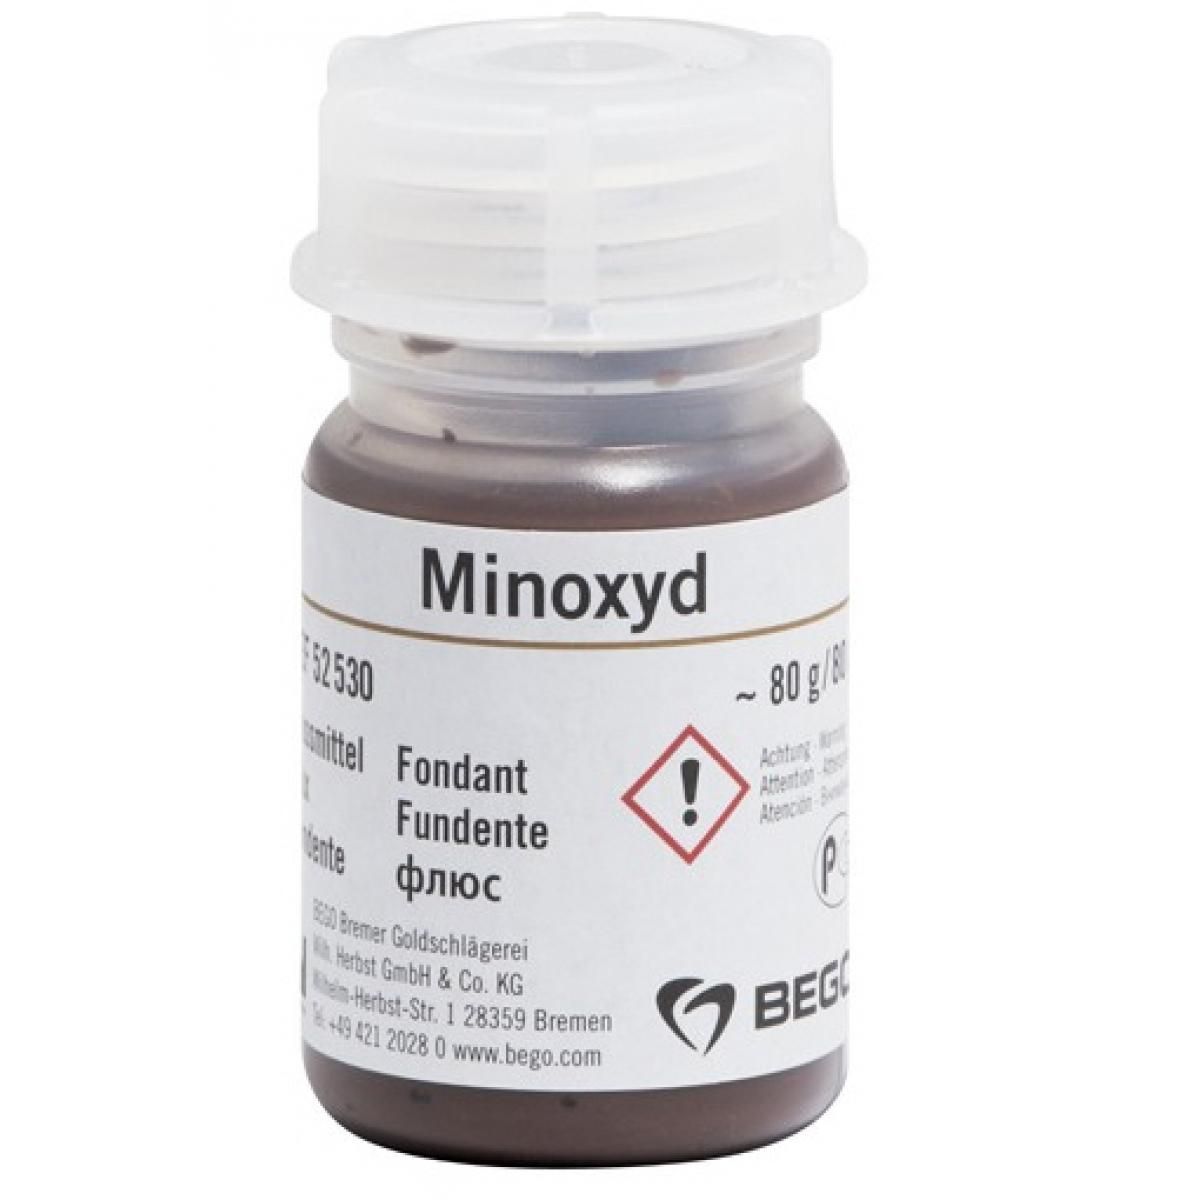 FUNDENTE MINOXYD 80GR BEGO -